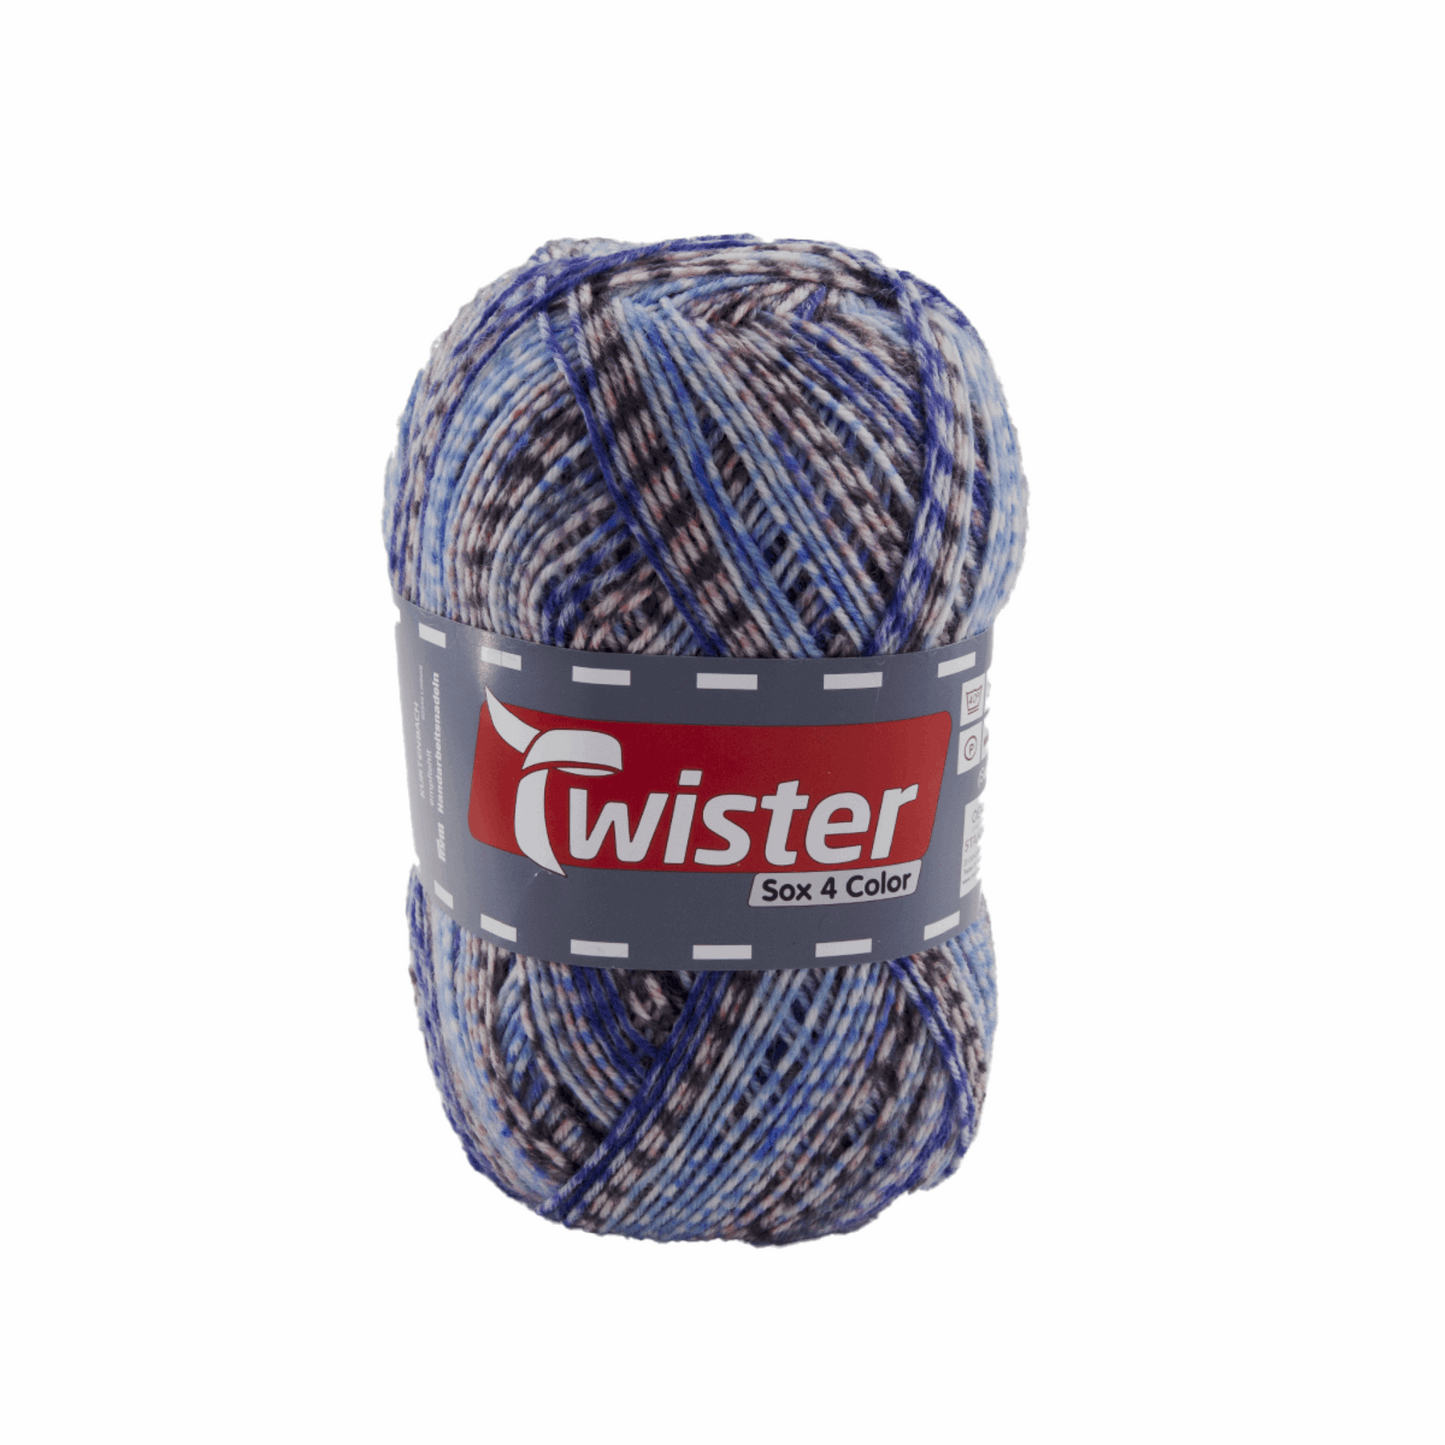 Twister Sox4 Color superwash, rot blau, 98306, Farbe 824